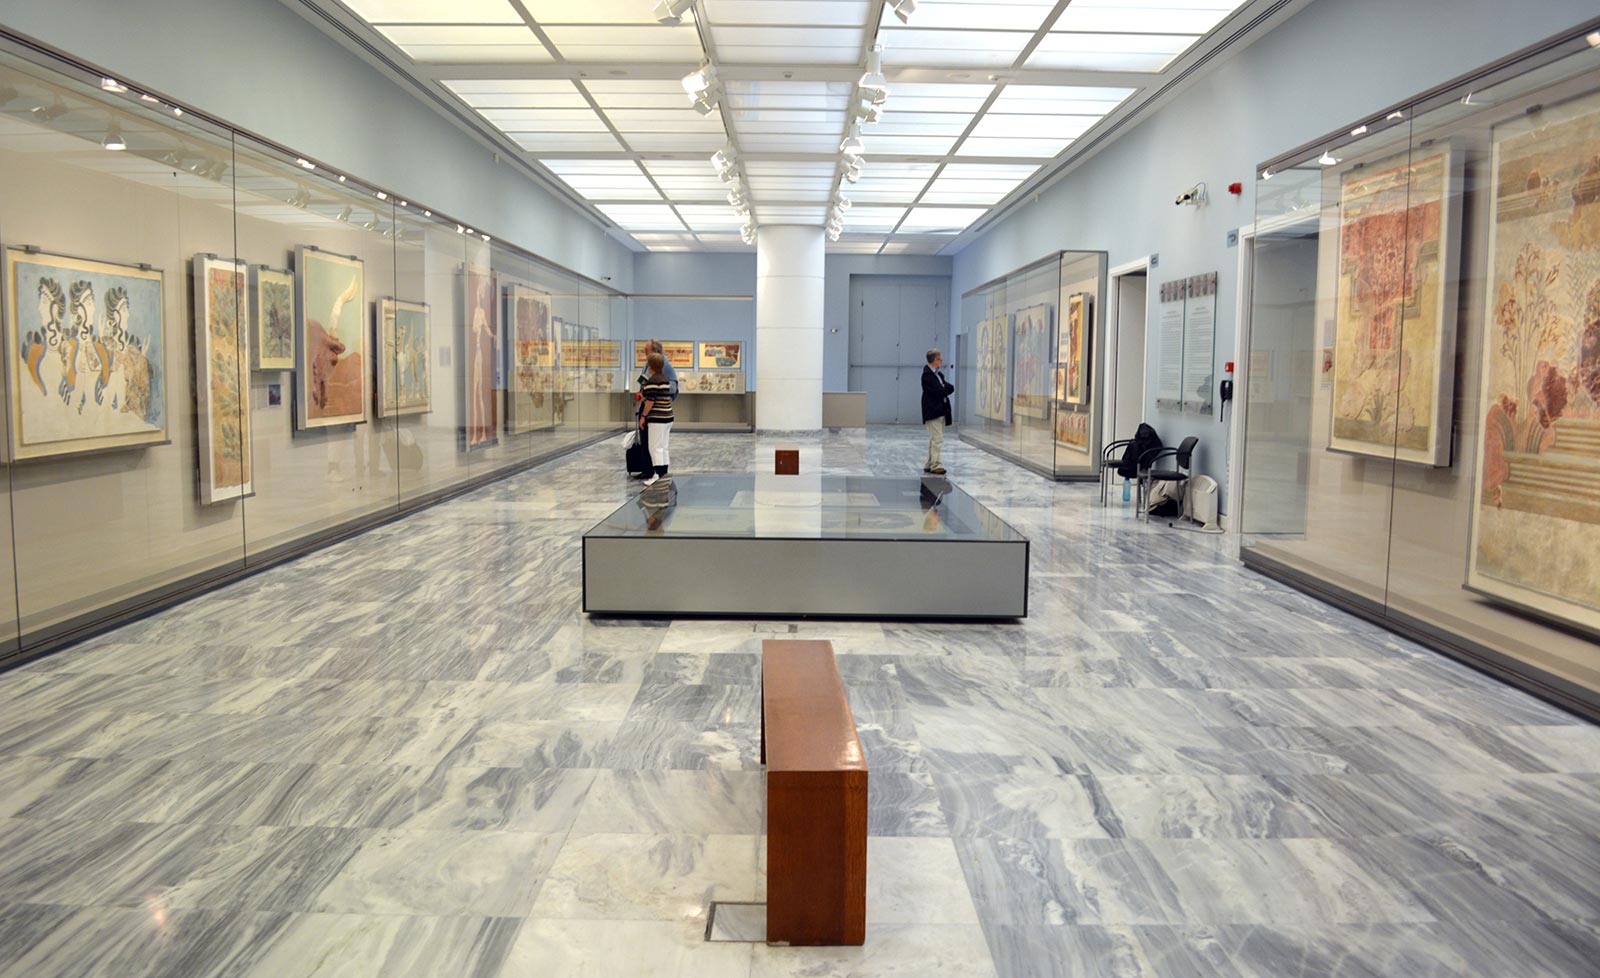 More information about "Το Αρχαιολογικό Μουσείο Ηρακλείου απέσπασε Ειδικό Έπαινο και μπήκε στα διακεκριμένα μουσεία της Ευρώπης"